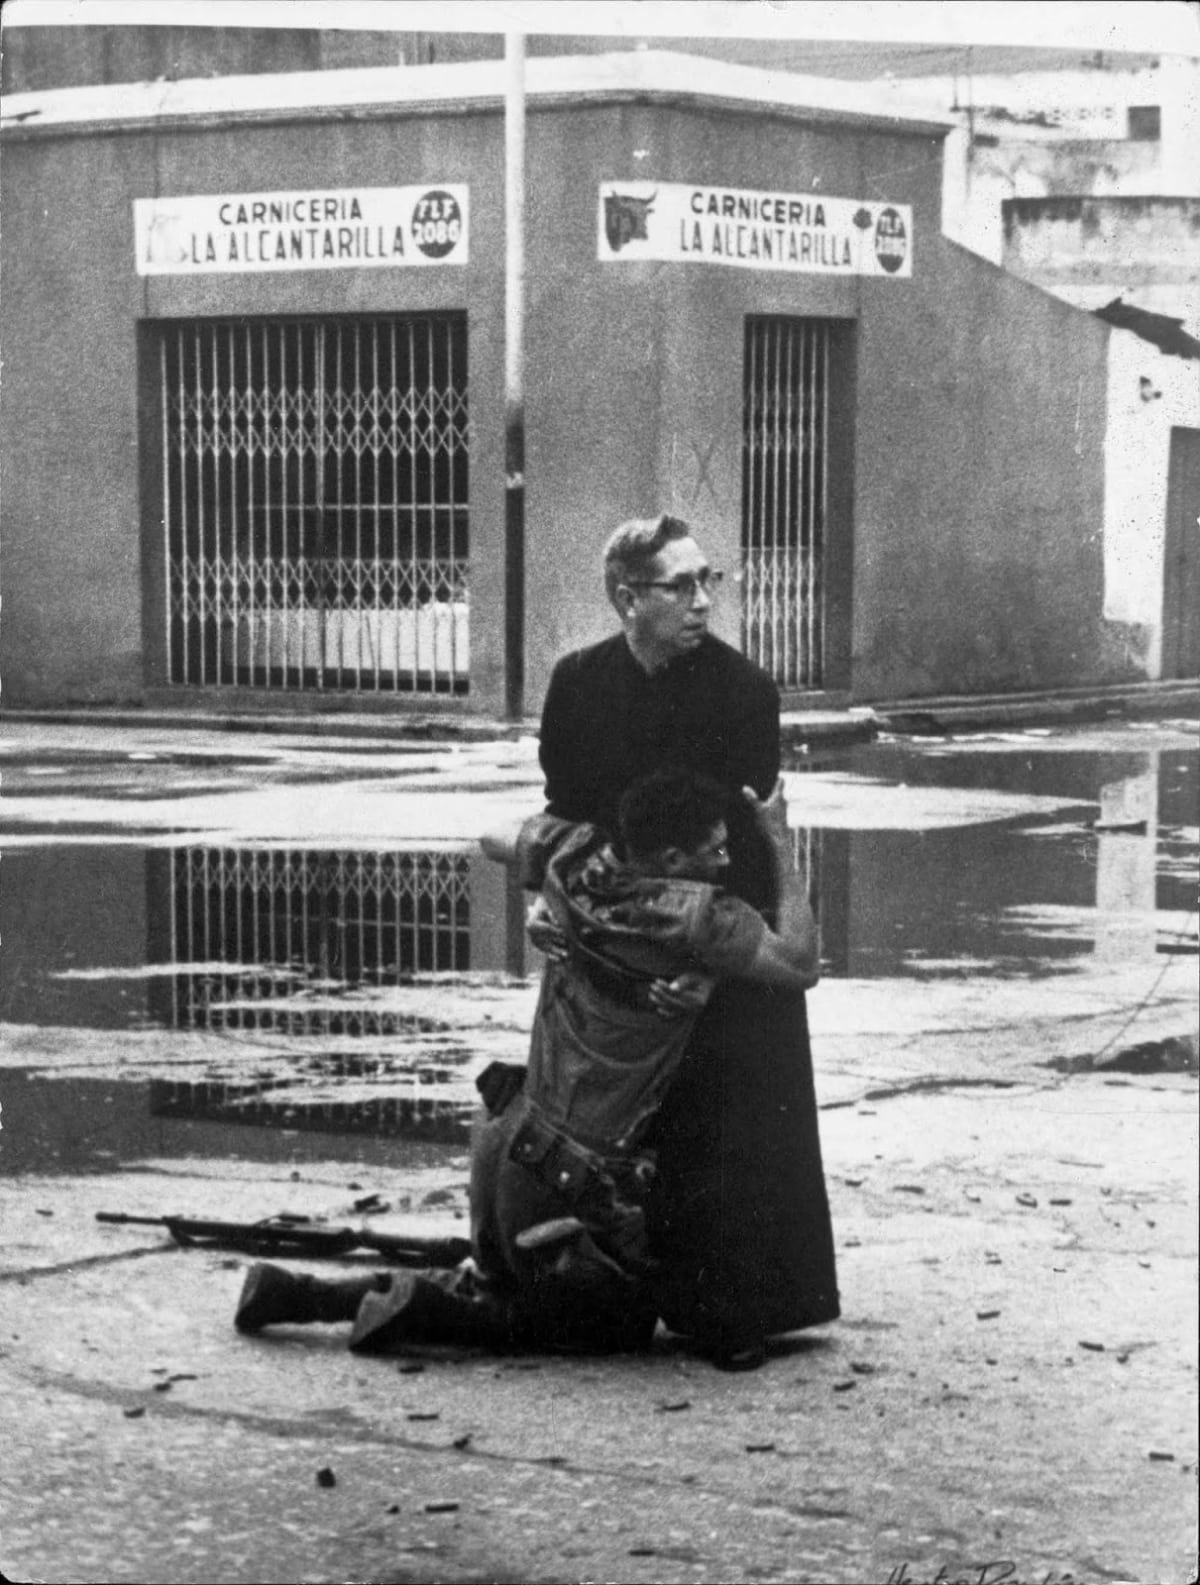 Priest's Courage in Crisis: Héctor Rondón Lovera's Iconic Shot